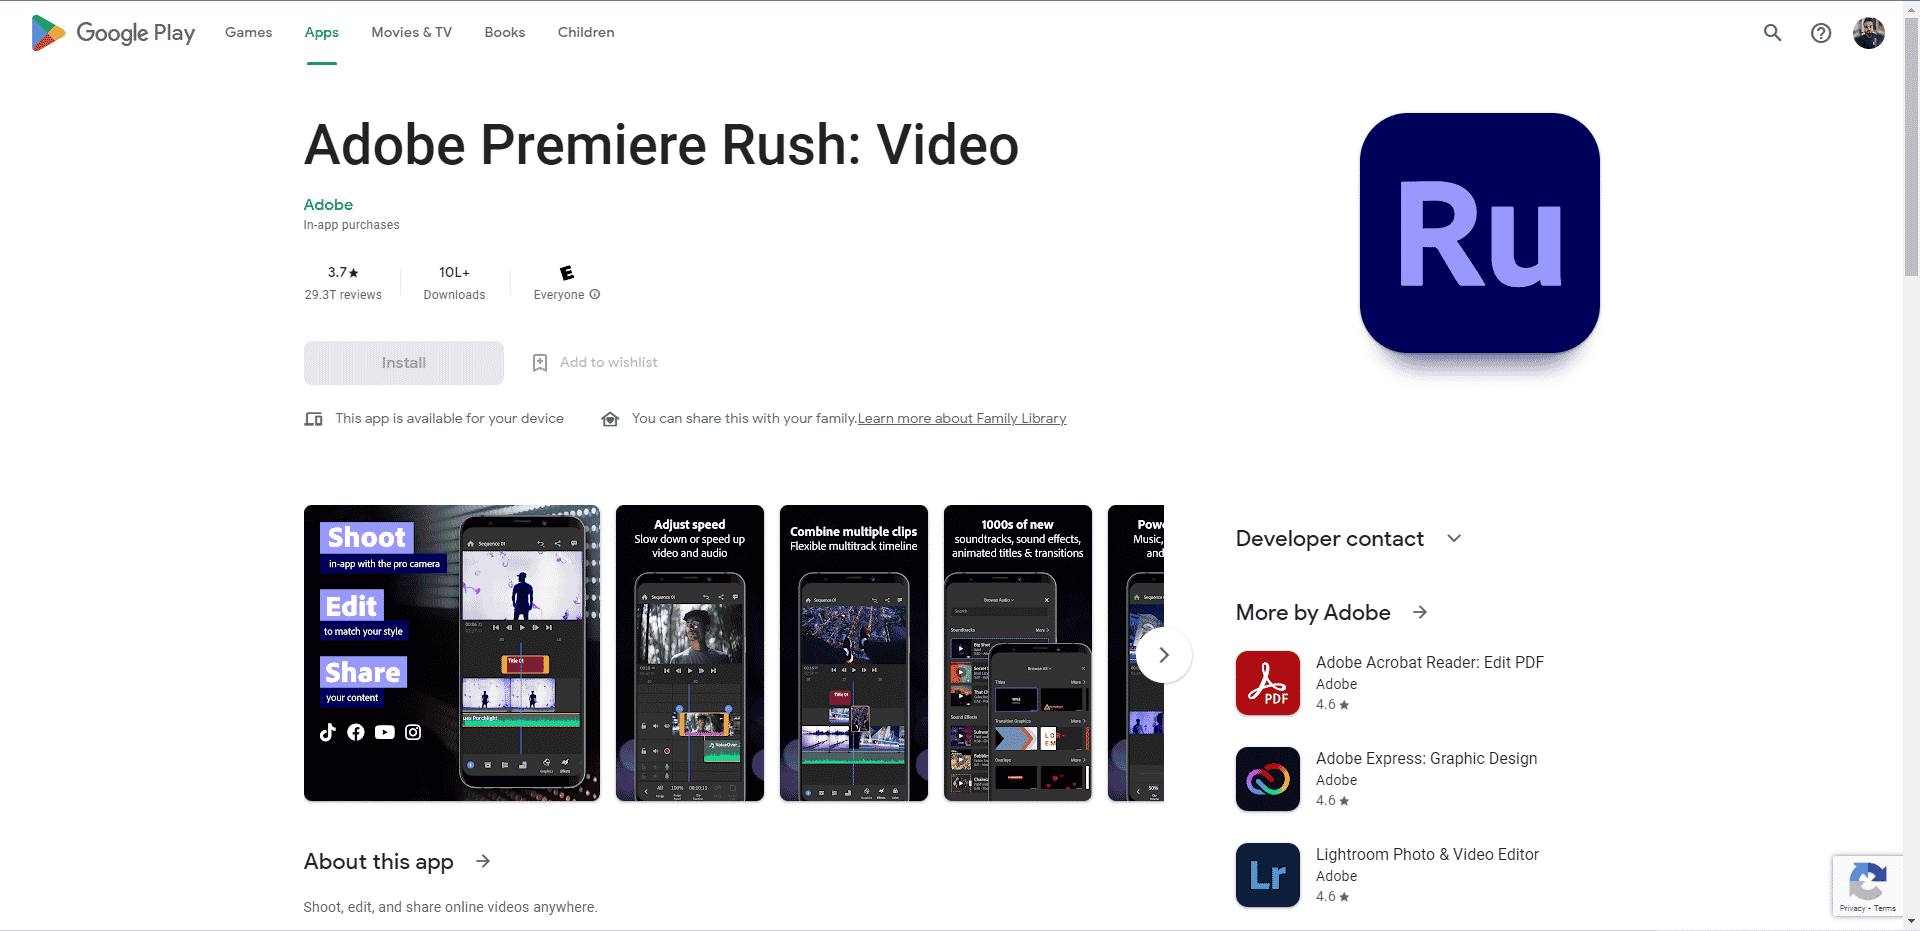 Adobe Premiere Rush Play Store webpage